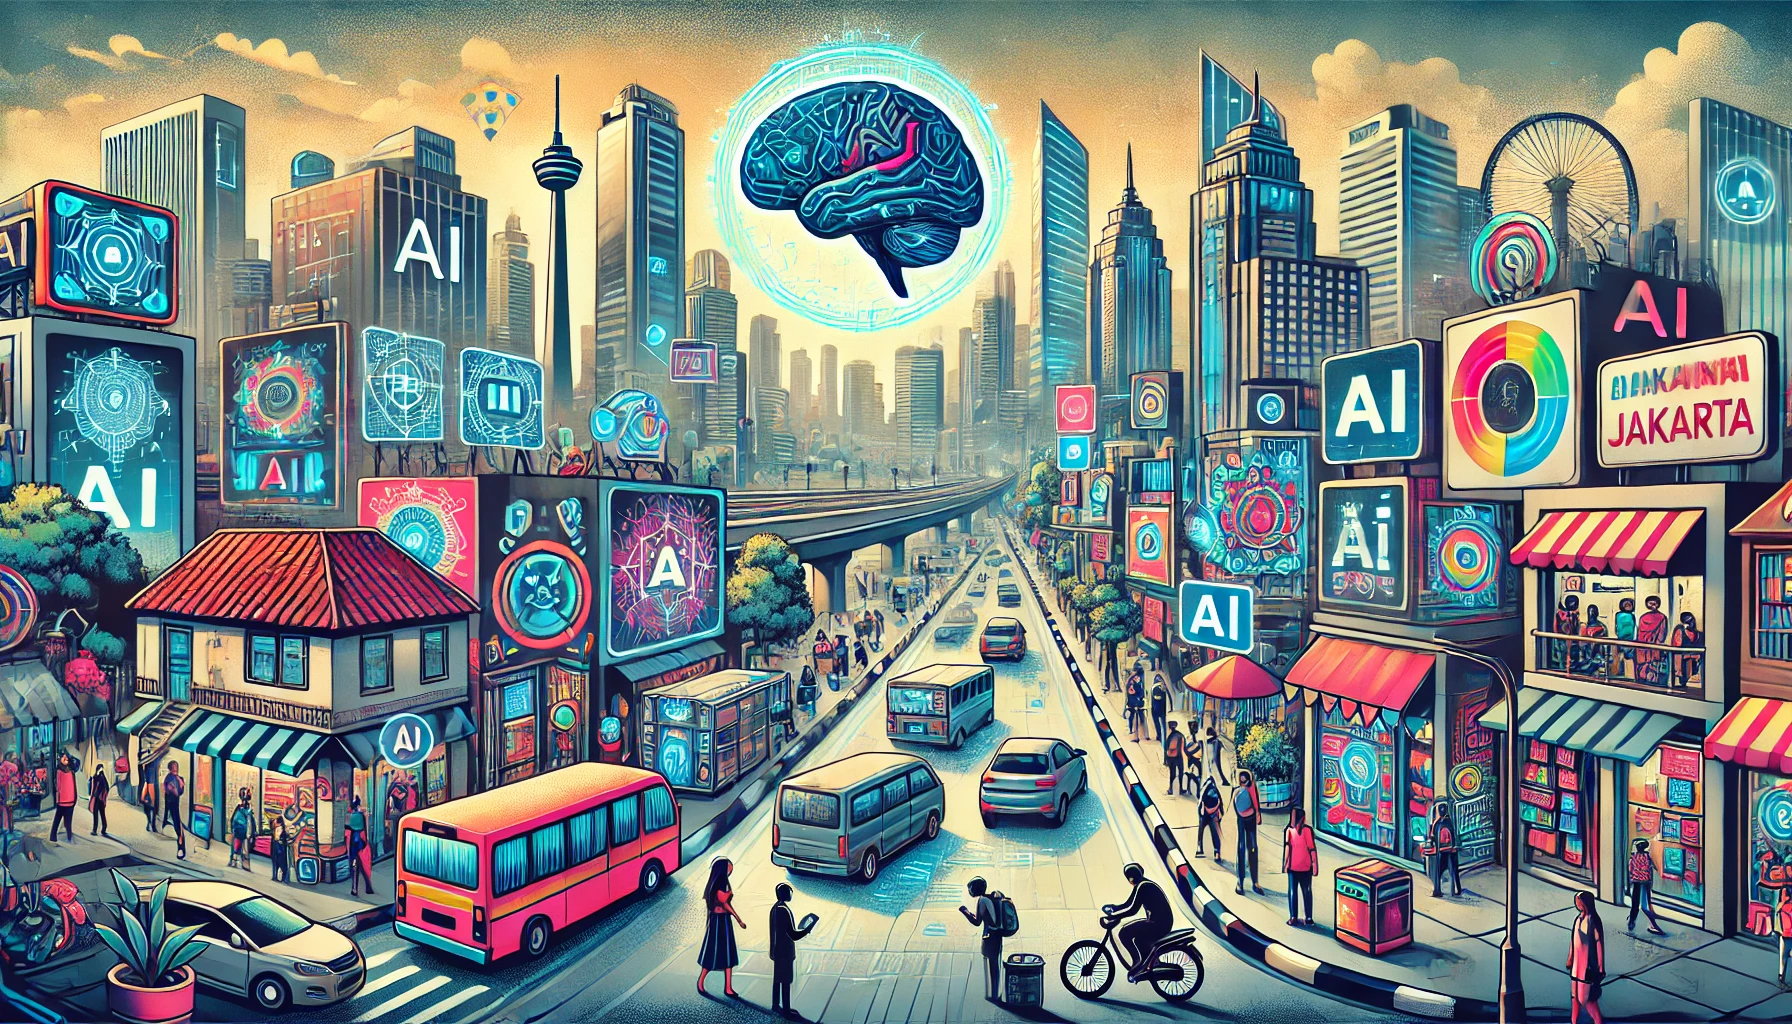 Urban street art style illustration of a futuristic AI cityscape in Jakarta